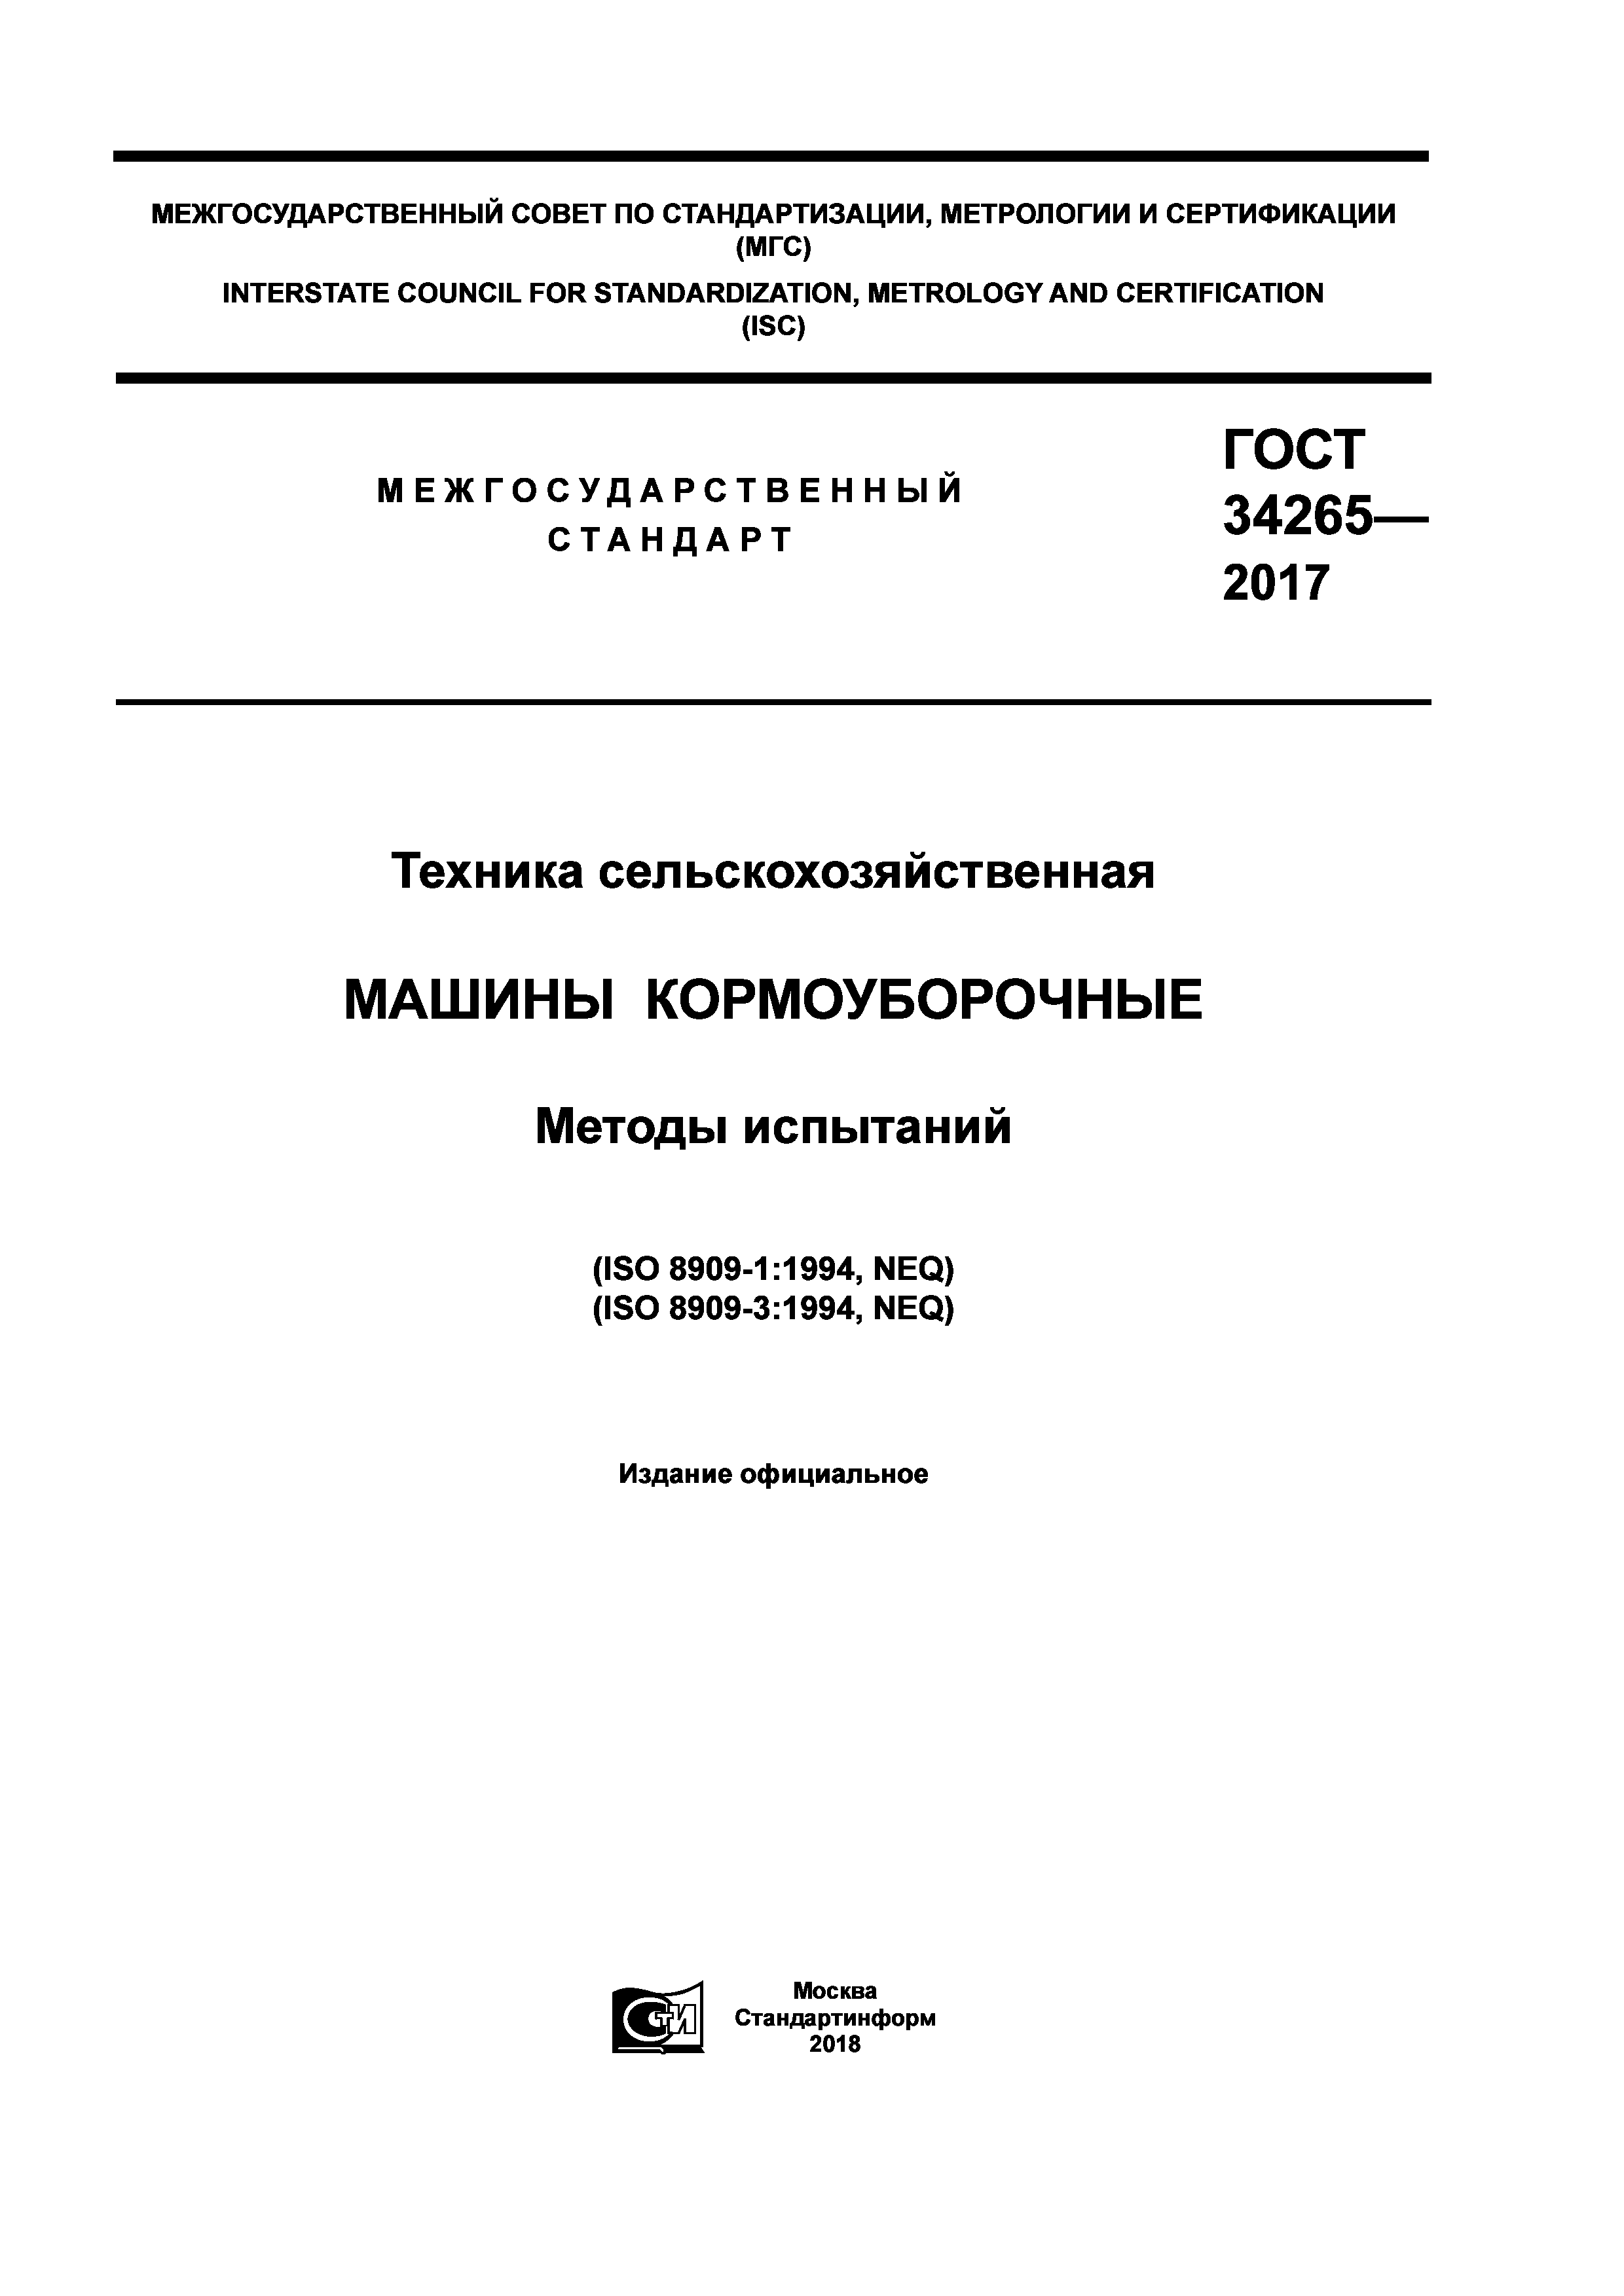 ГОСТ 34265-2017